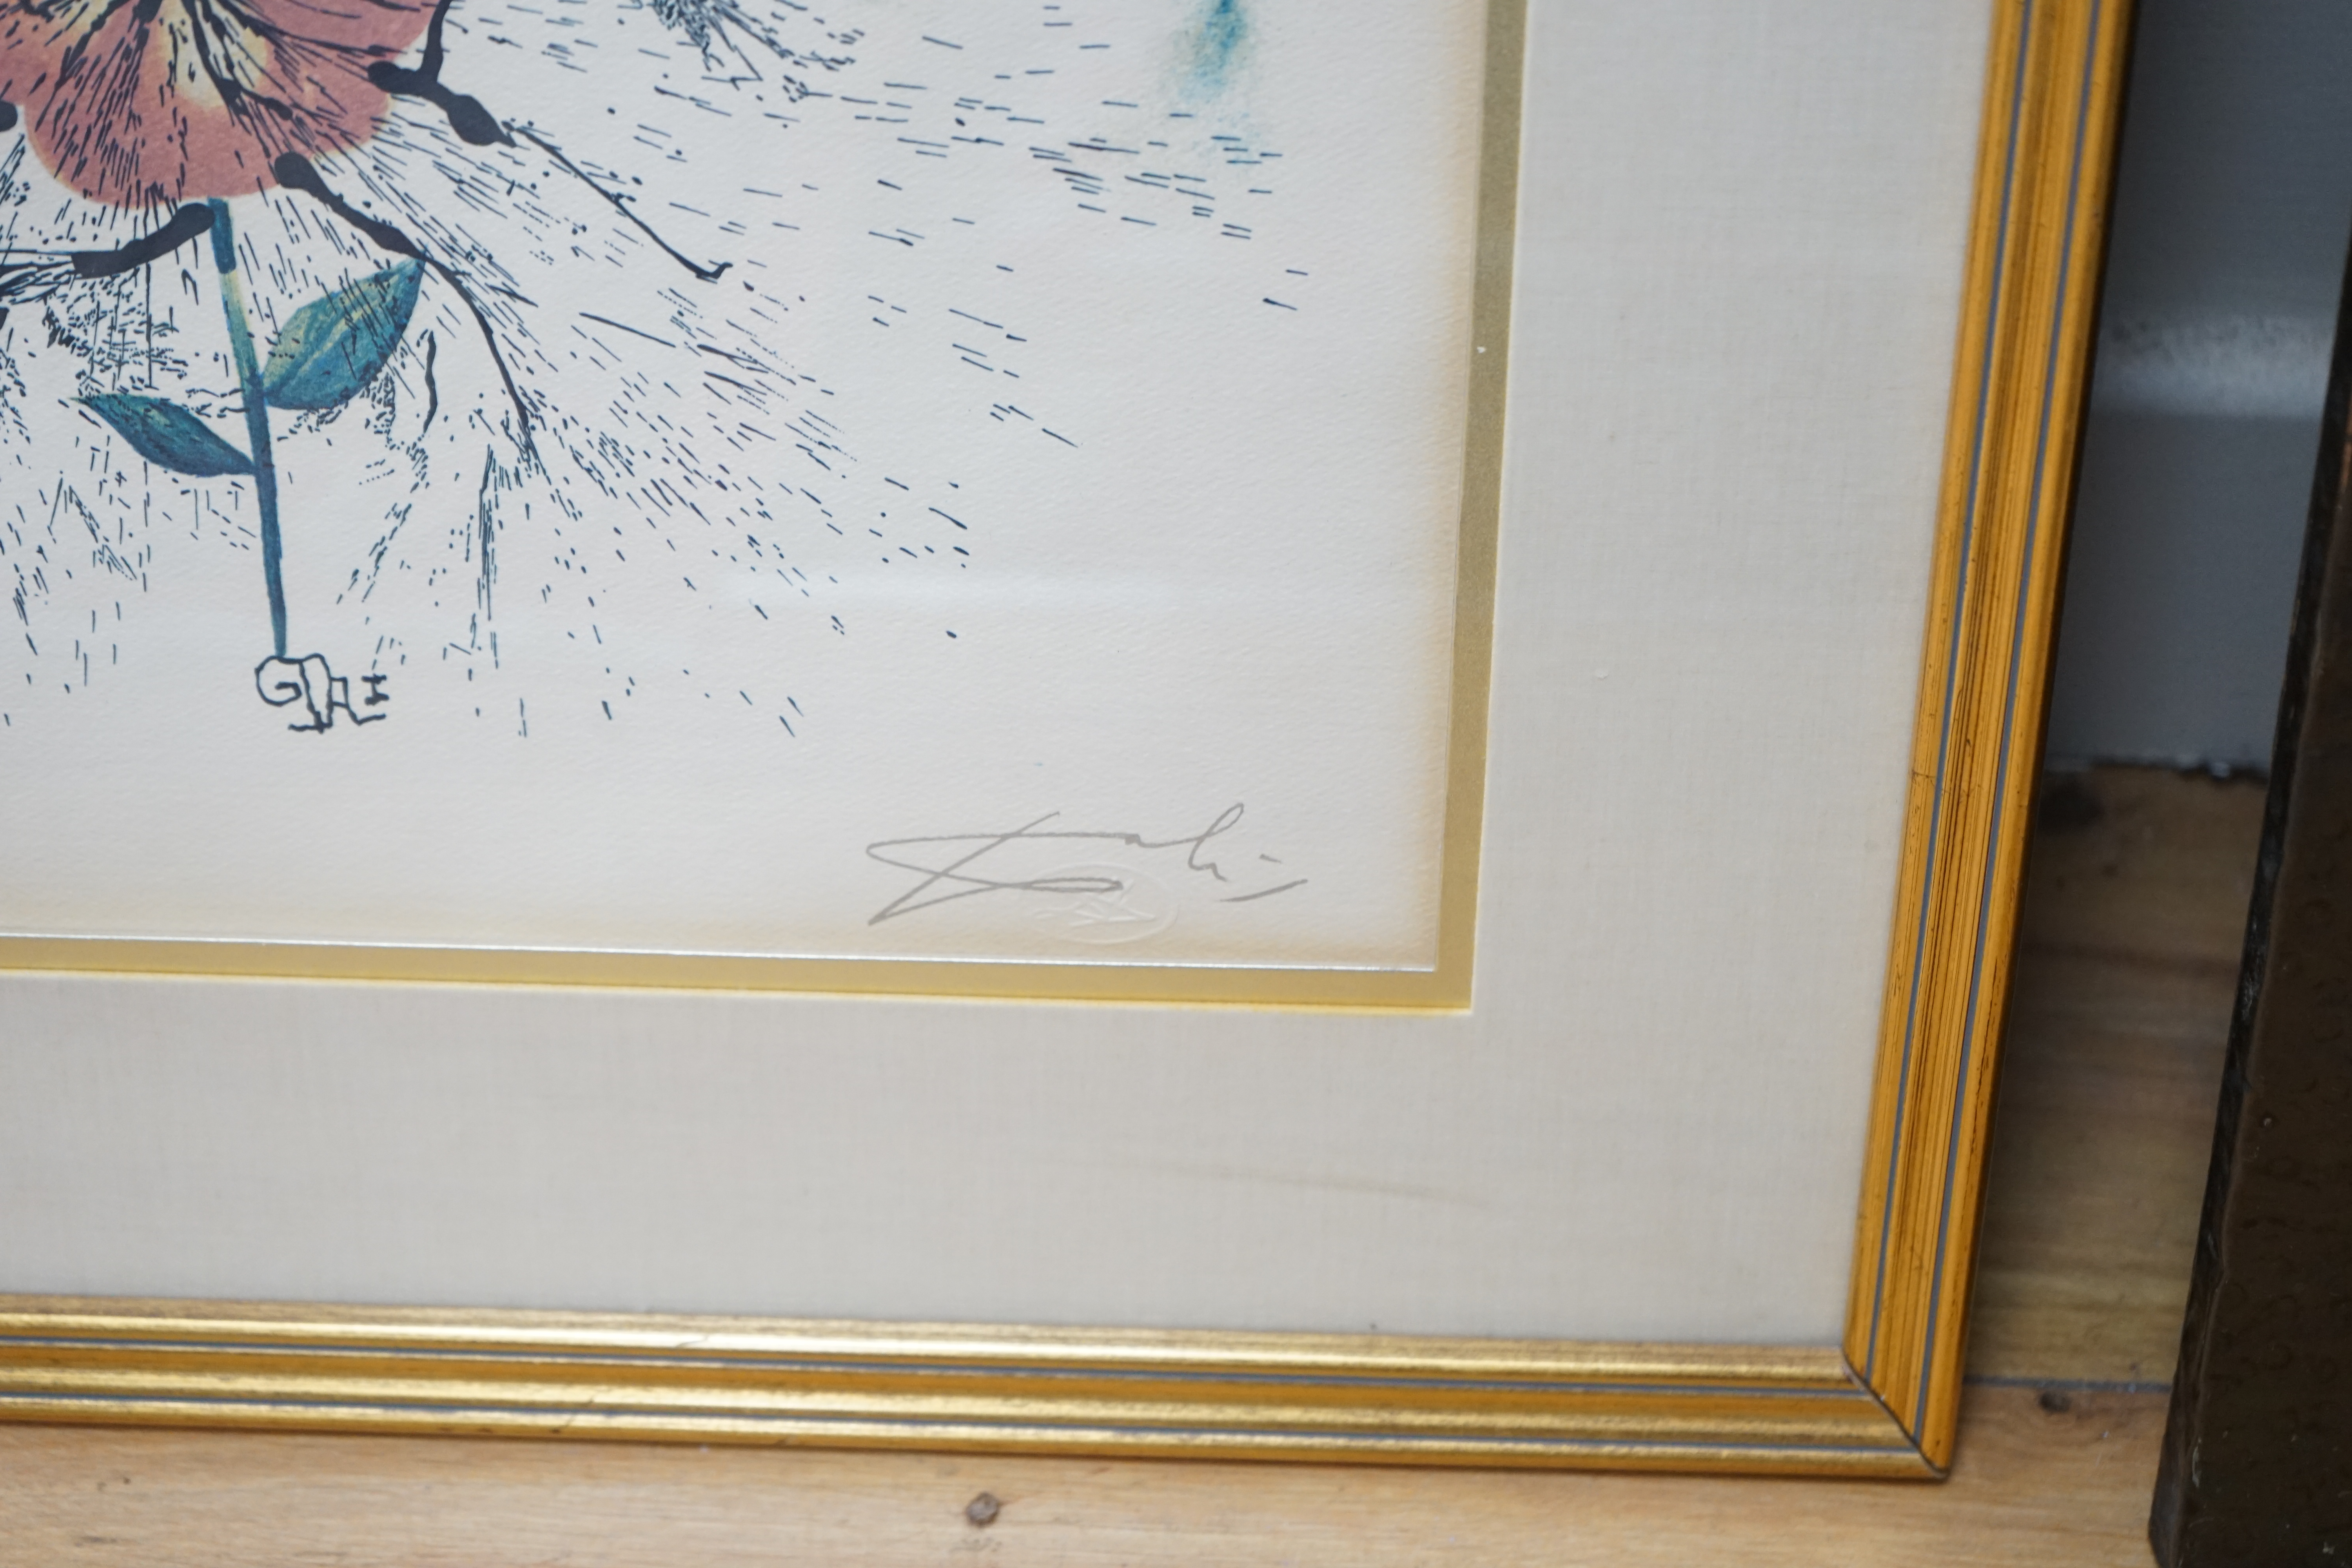 Salvador Dali (Spanish 1904-1989), colour lithograph, Alice in Wonderland, ‘Alice’s Evidence’, pencil numbered 132/300, facsimile signature, certificate of authenticity verso 56 x 37cm. Condition - fair